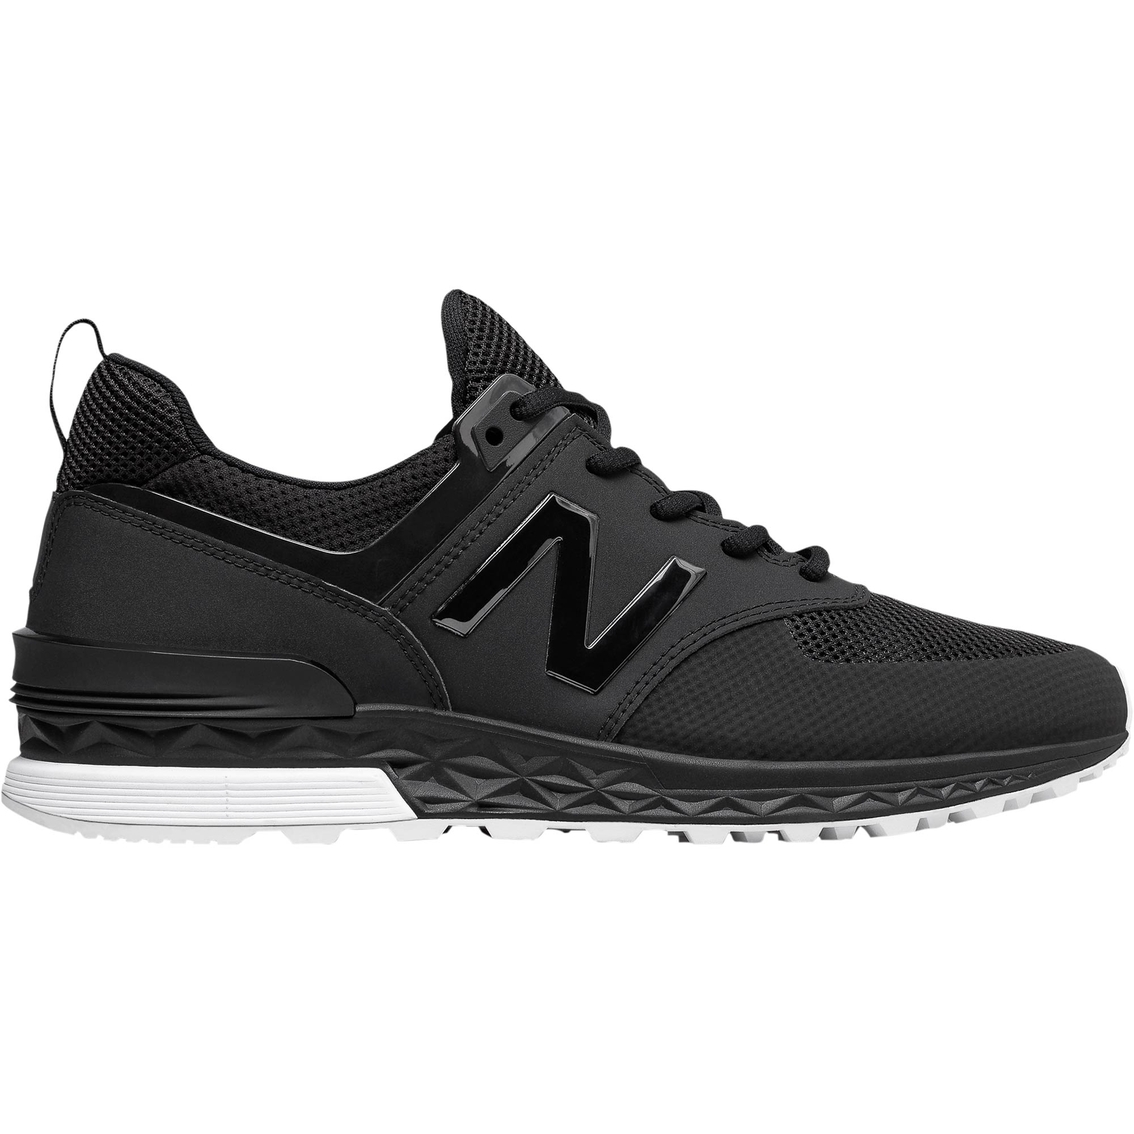 New Balance Men's Athleisure Shoes Ms574sbk | Sneakers | Shoes | Shop ...